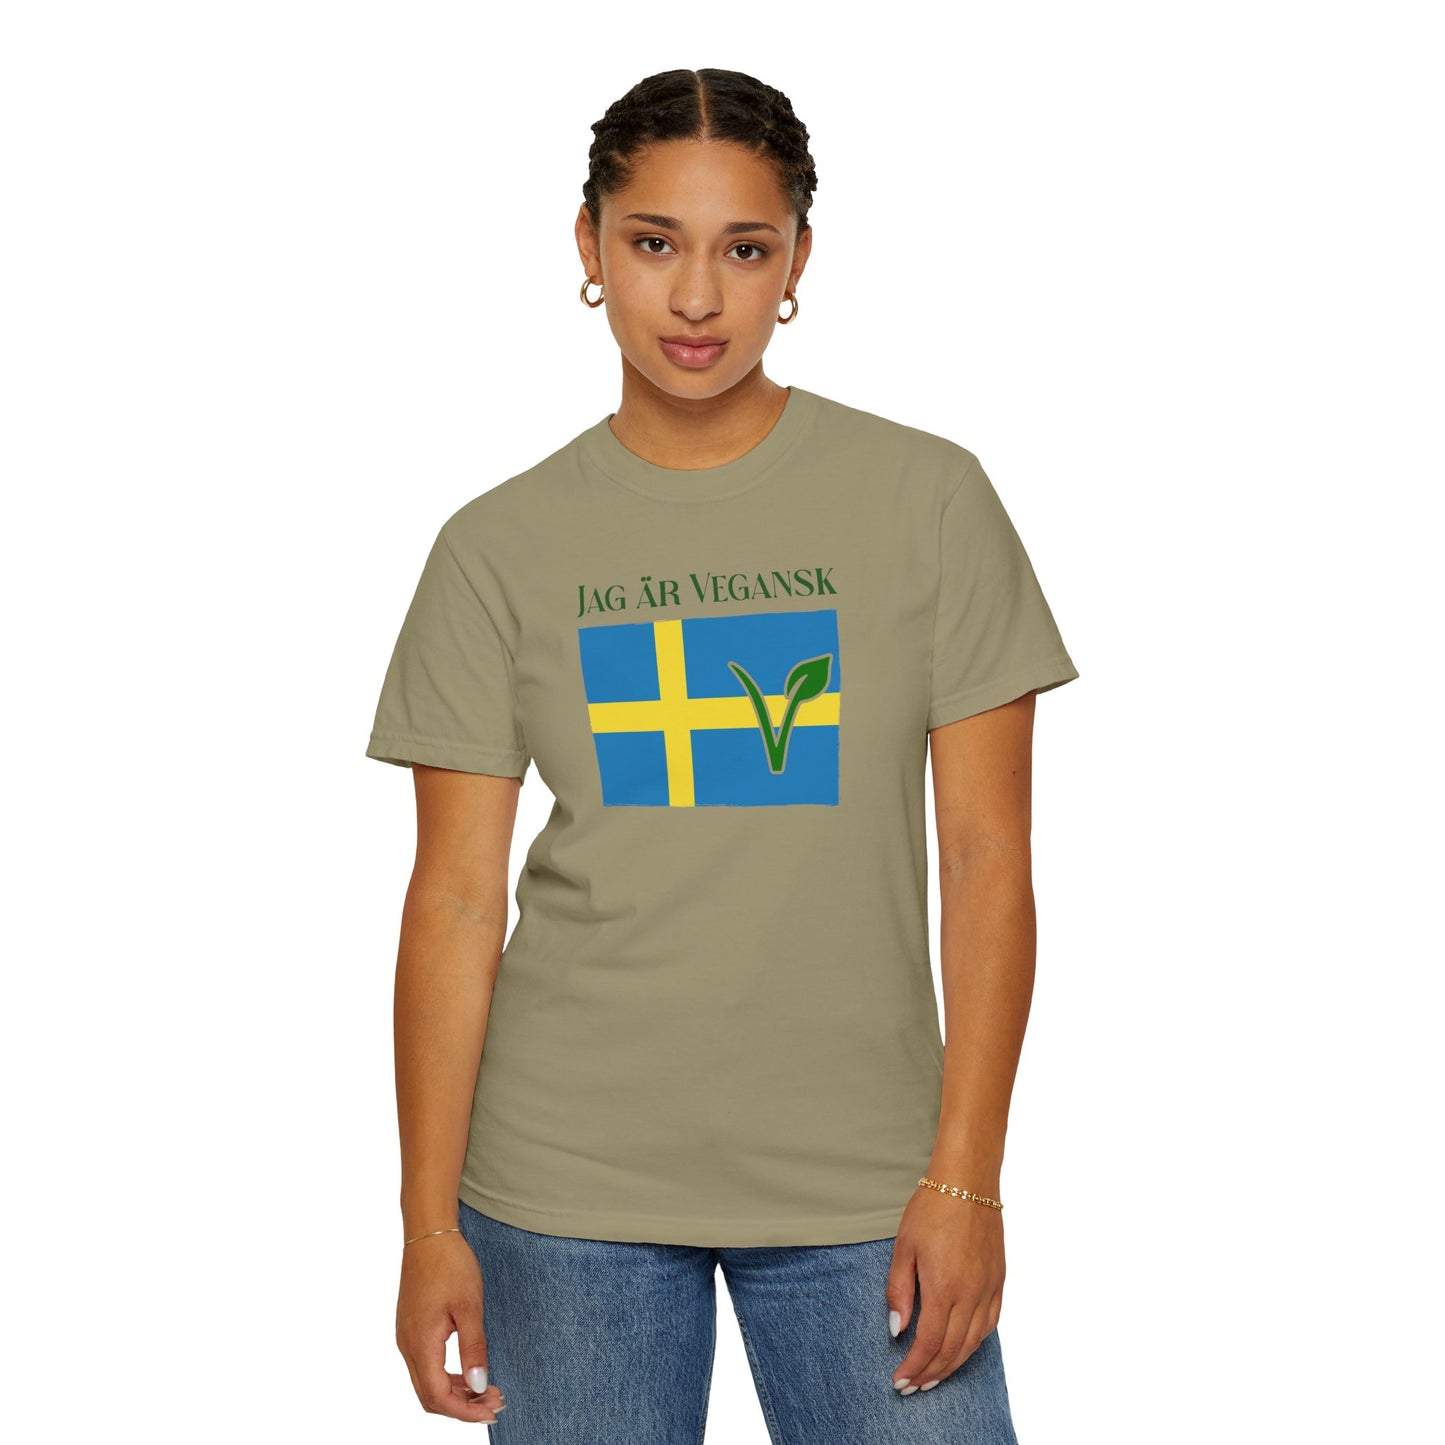 Jag är Vegansk Swedish Vegan Tee Shirt in Light and Tropical Colors {Unisex}